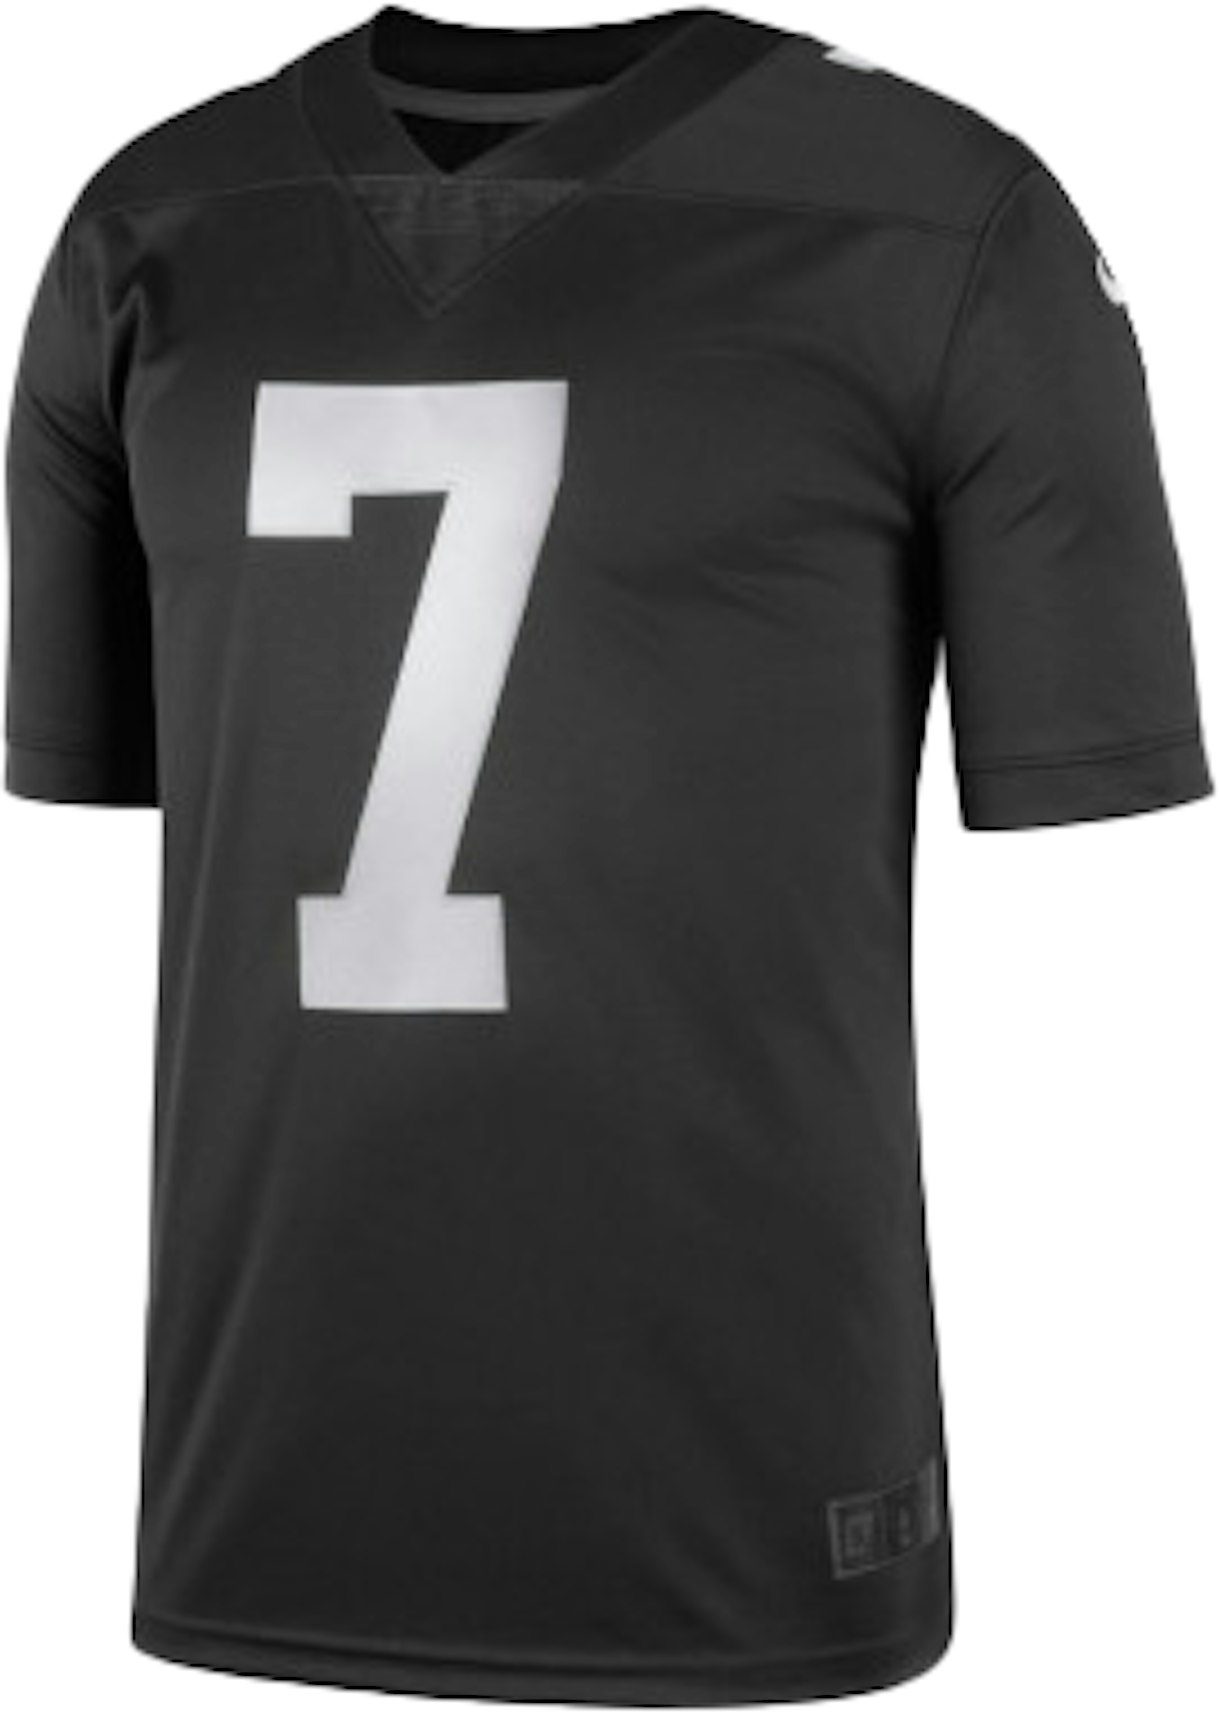 Nike Kaepernick Jersey Black - SS19 US